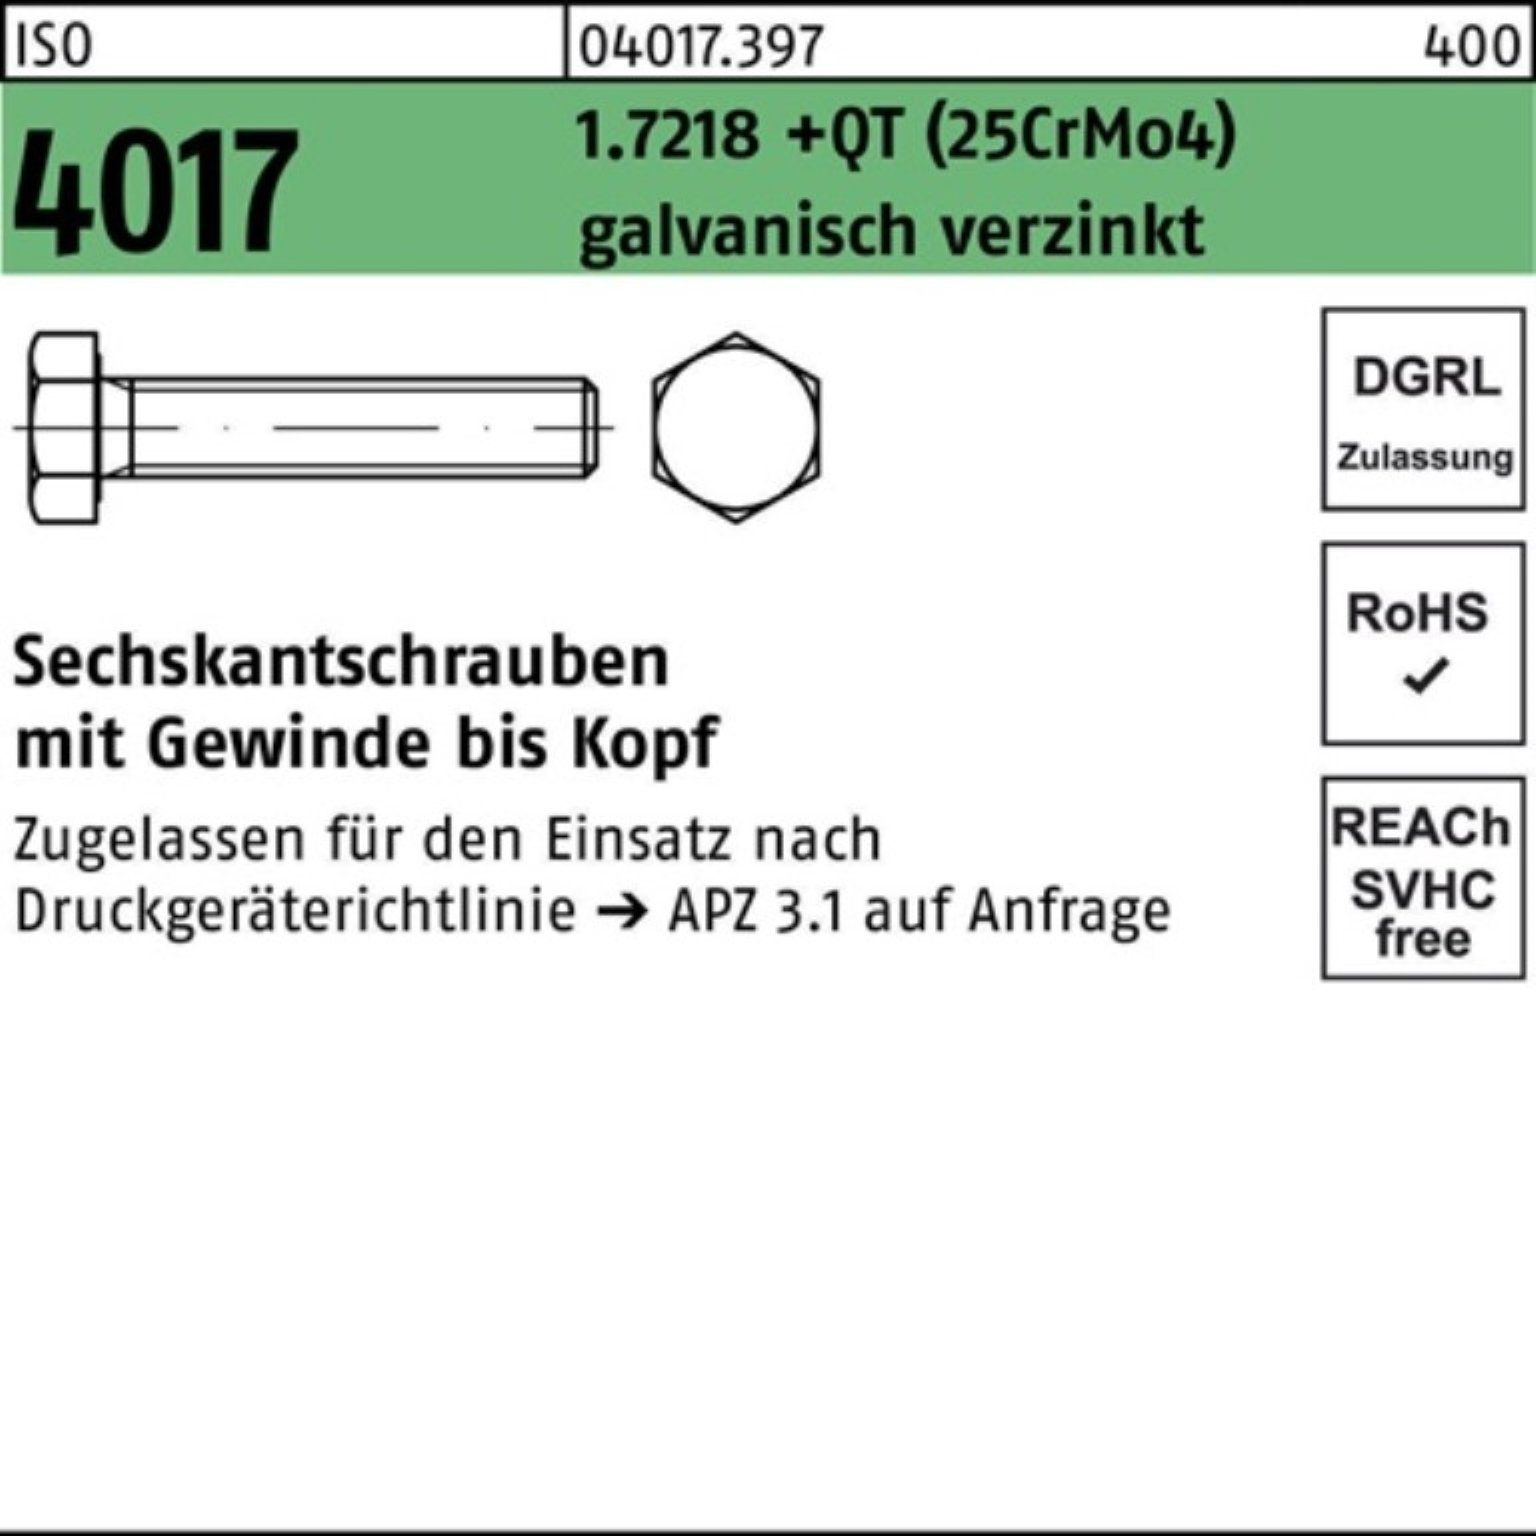 Bufab Sechskantschraube 100er Pack Sechskantschraube +QT (25CrMo4) 4017 VG M33x130 1.7218 ISO